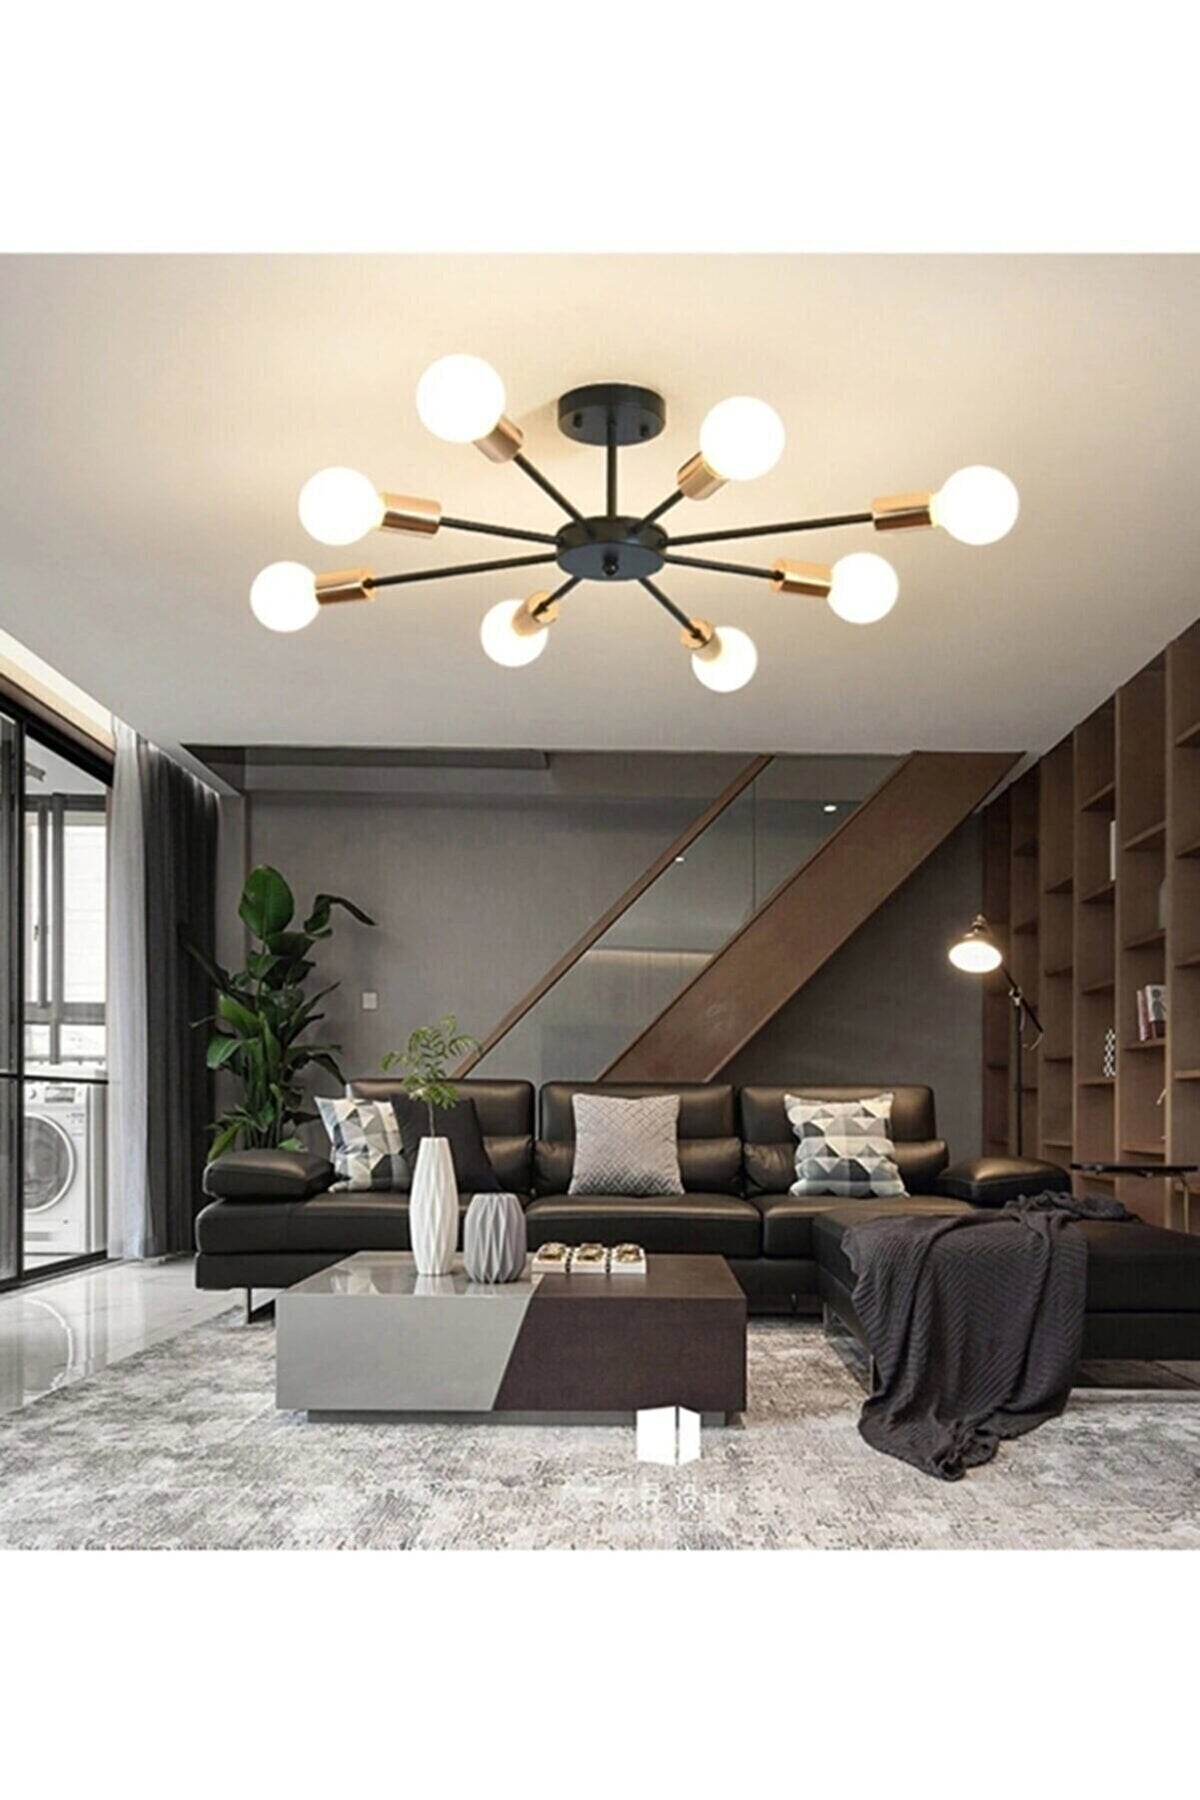 Yıldız Living Room - Kitchen - Cafe Model Ceiling Plate 8-Piece Chandelier (WITHOUT BULB)